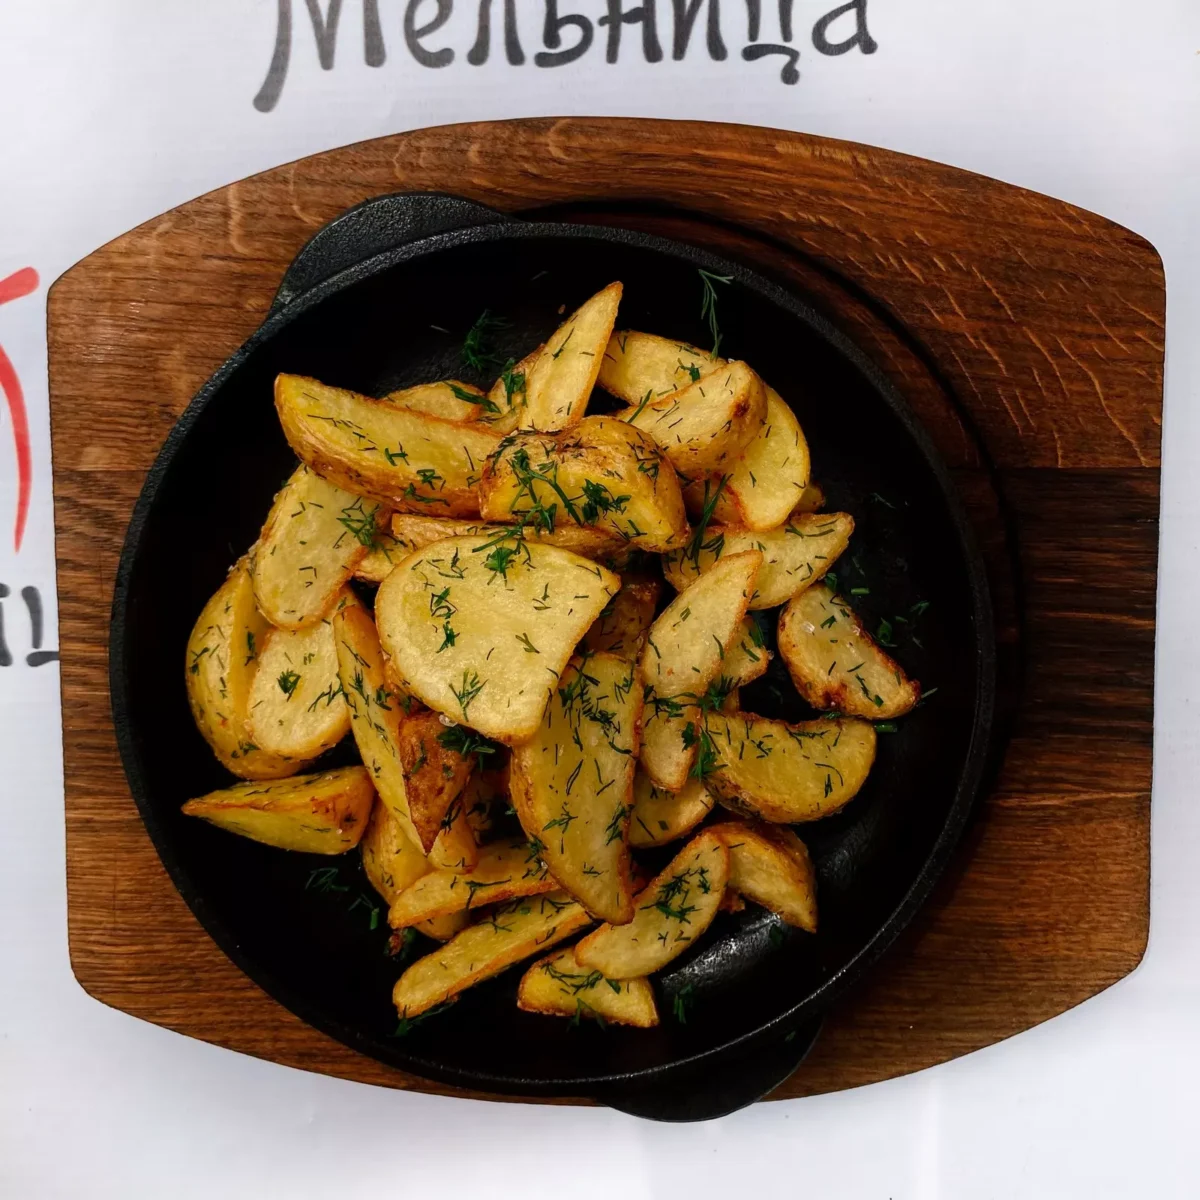 Idaho potatoes • "Melnitsa" restaurant, Kharkiv